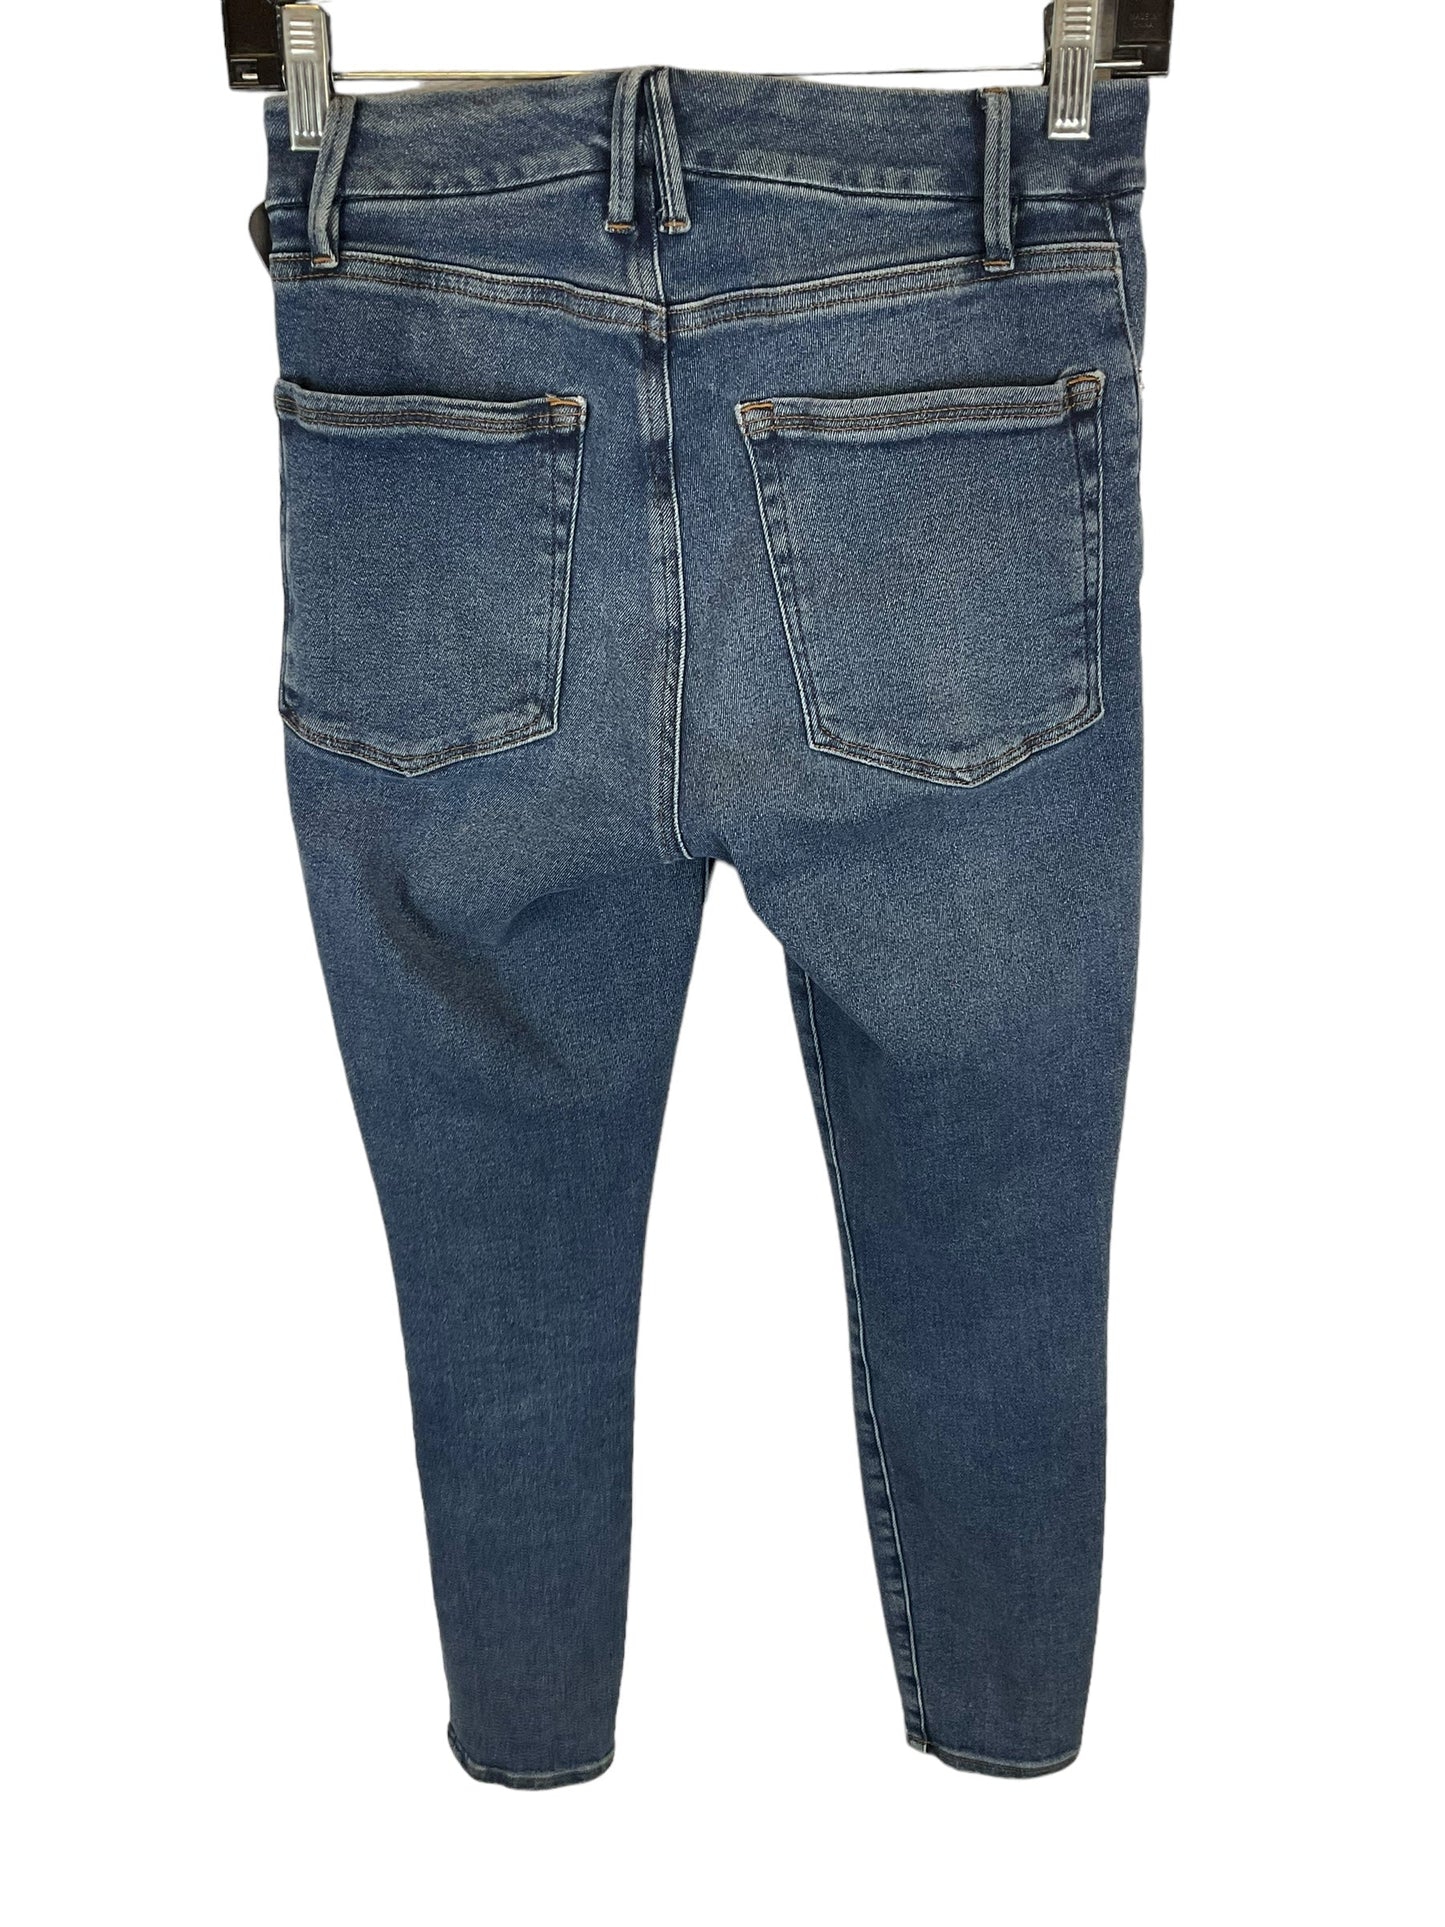 Blue Denim Jeans Designer Good American, Size 2